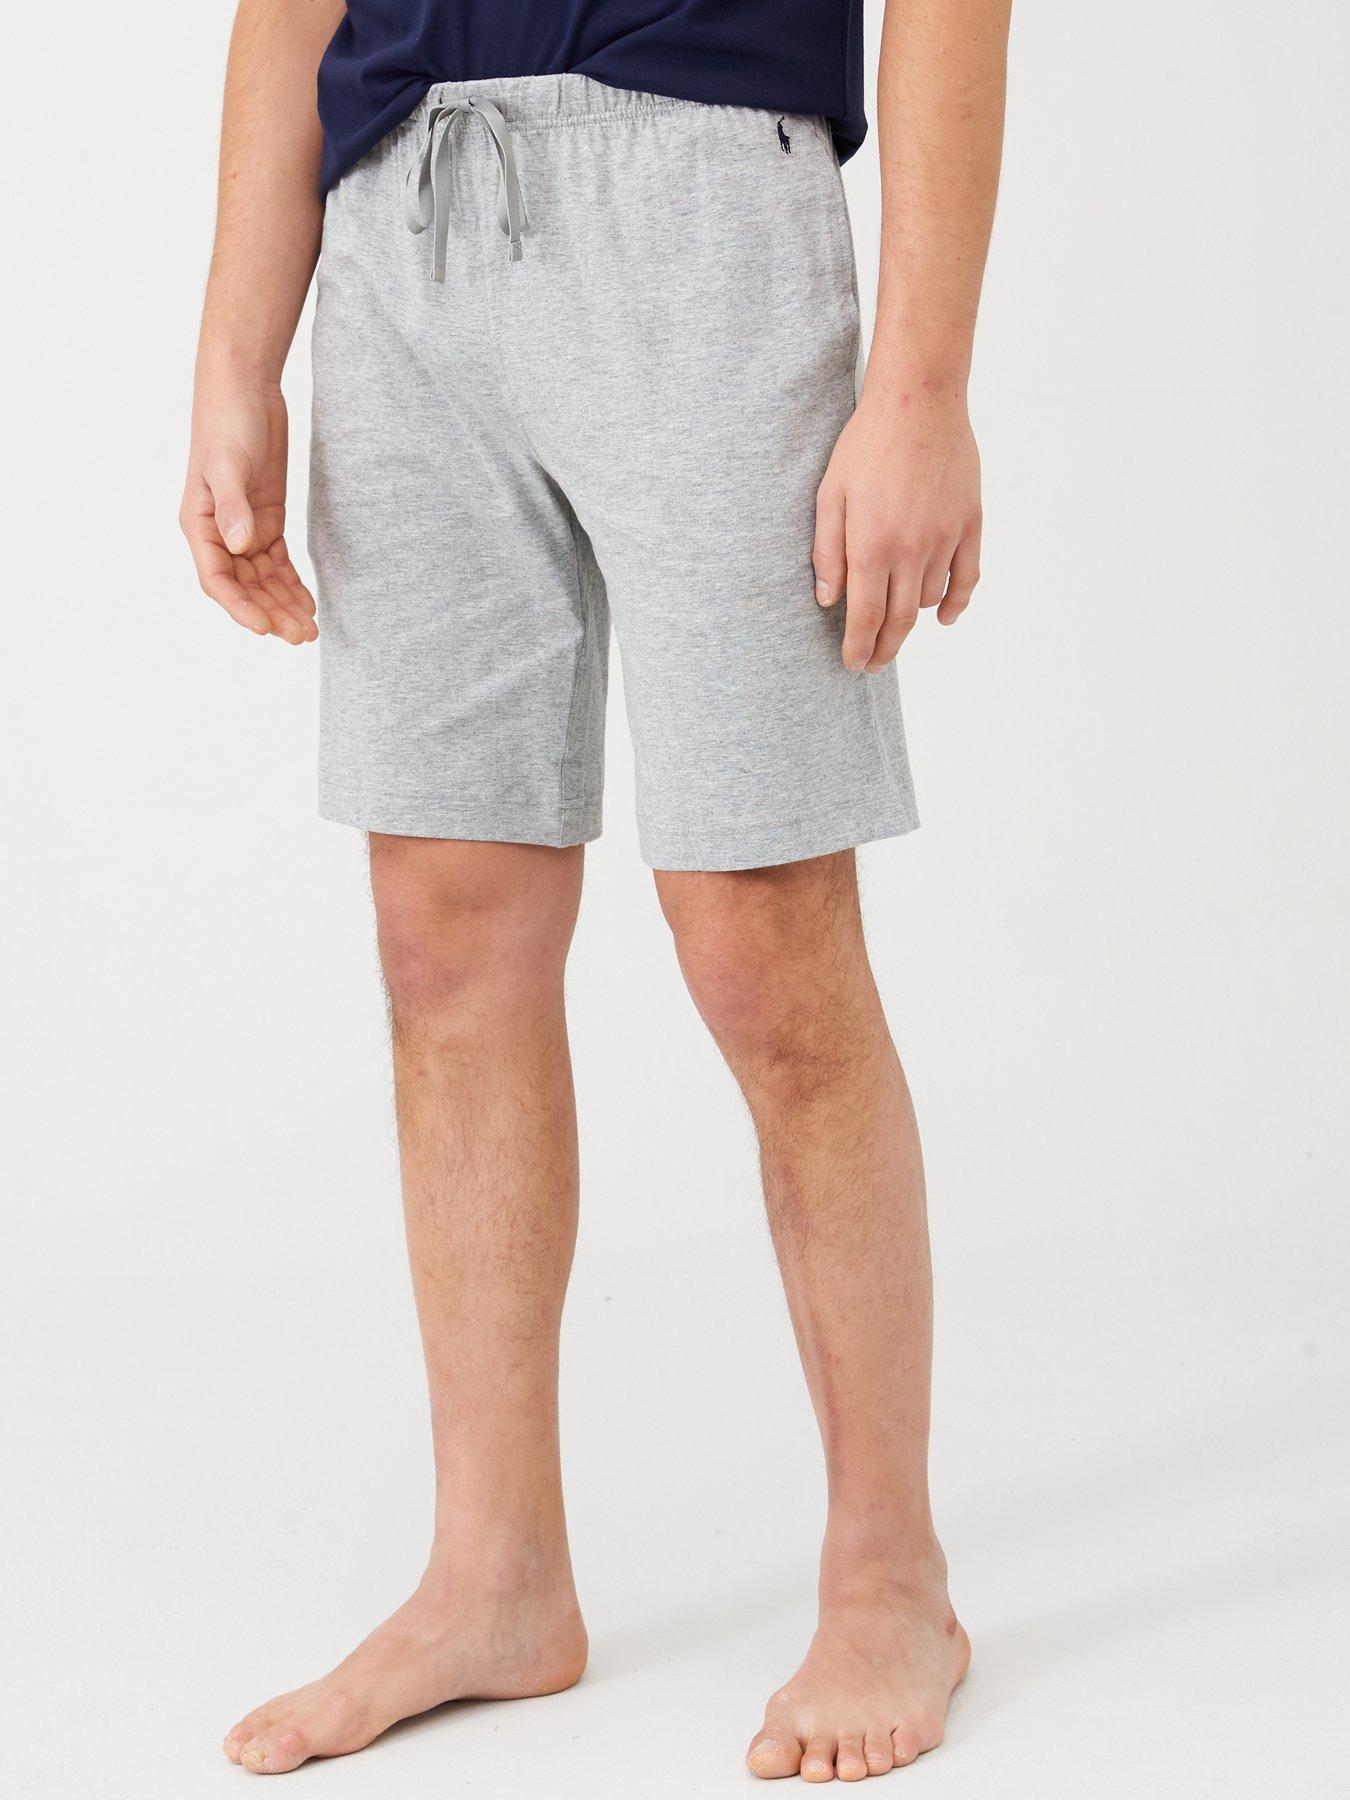 polo ralph lauren grey shorts